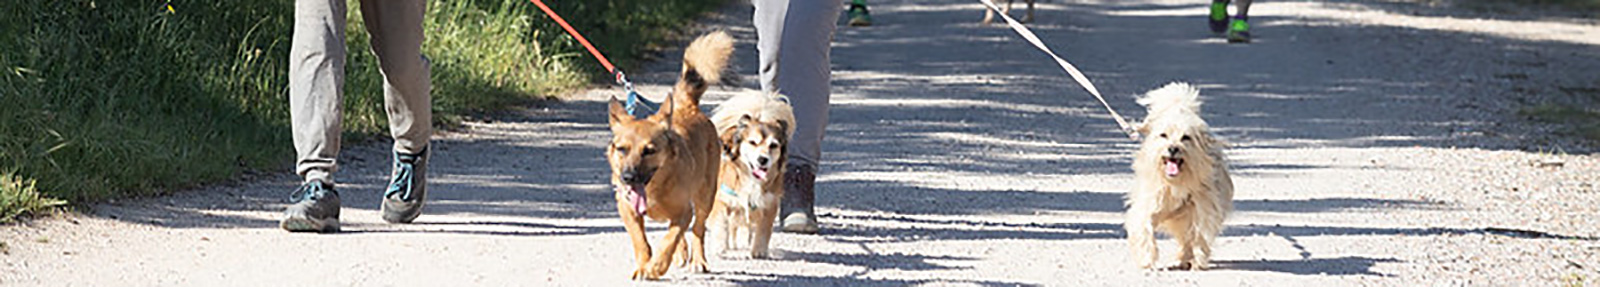 Three dogs walking